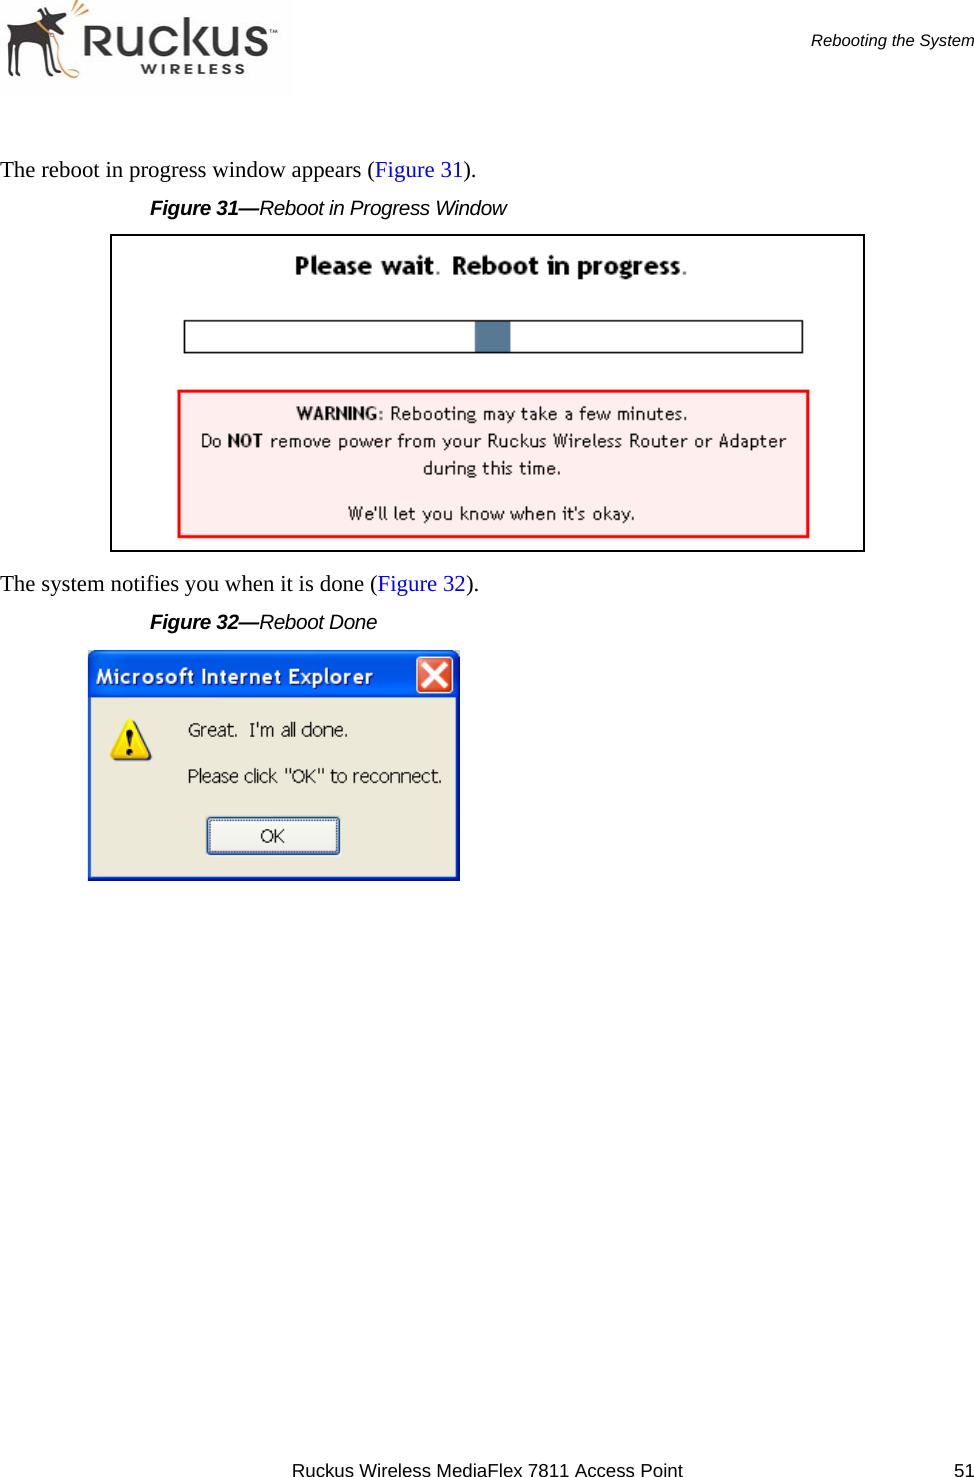 Ruckus Wireless MediaFlex 7811 Access Point 51Rebooting the SystemThe reboot in progress window appears (Figure 31).Figure 31—Reboot in Progress WindowThe system notifies you when it is done (Figure 32).Figure 32—Reboot Done